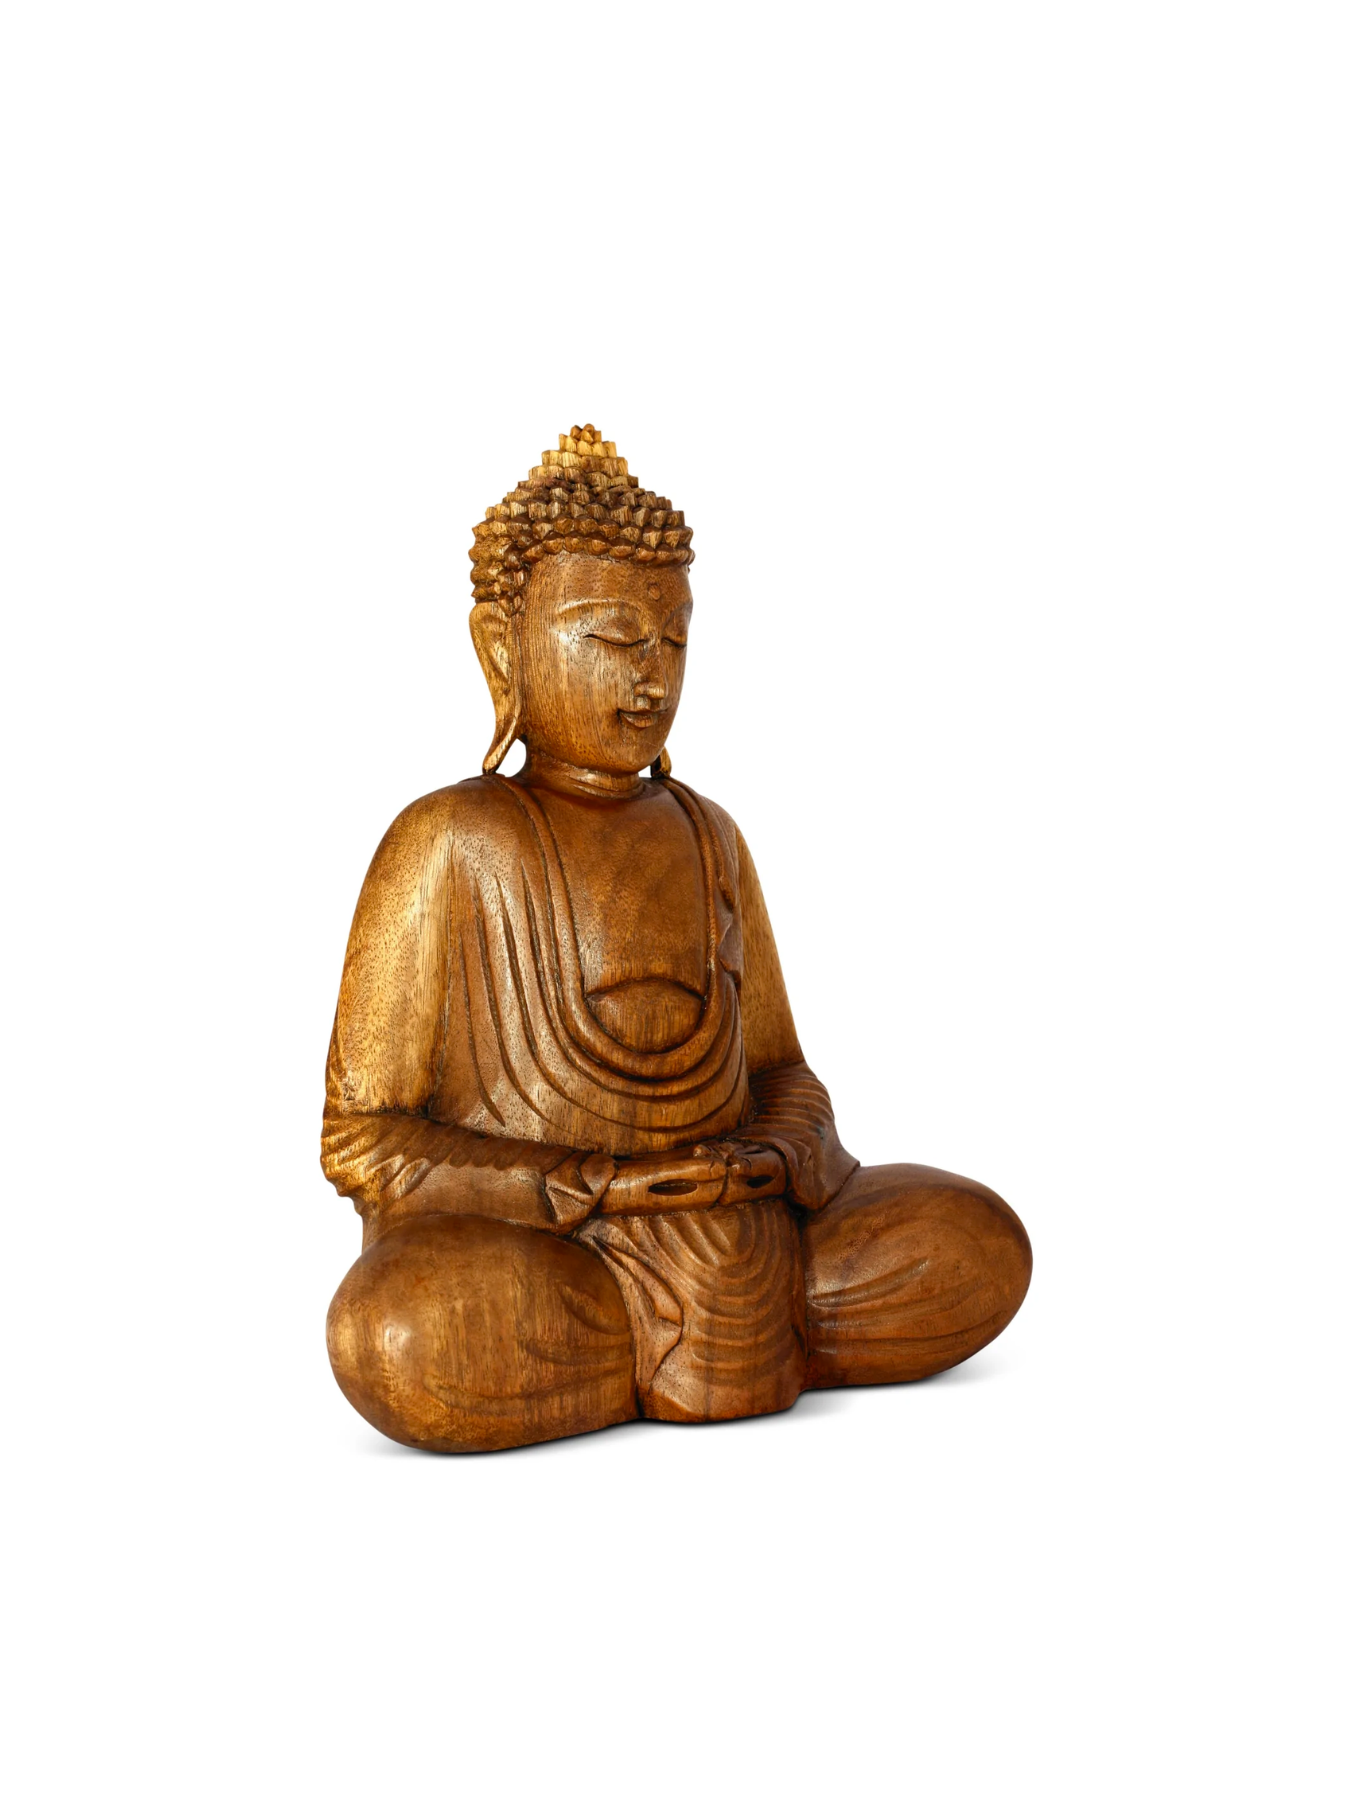 Wooden Serene Sitting Buddha "Dhyana Mudra" Statue Handmade Meditating Sculpture Figurine Decorative Home Decor Accent Handcrafted Art Oriental Decor